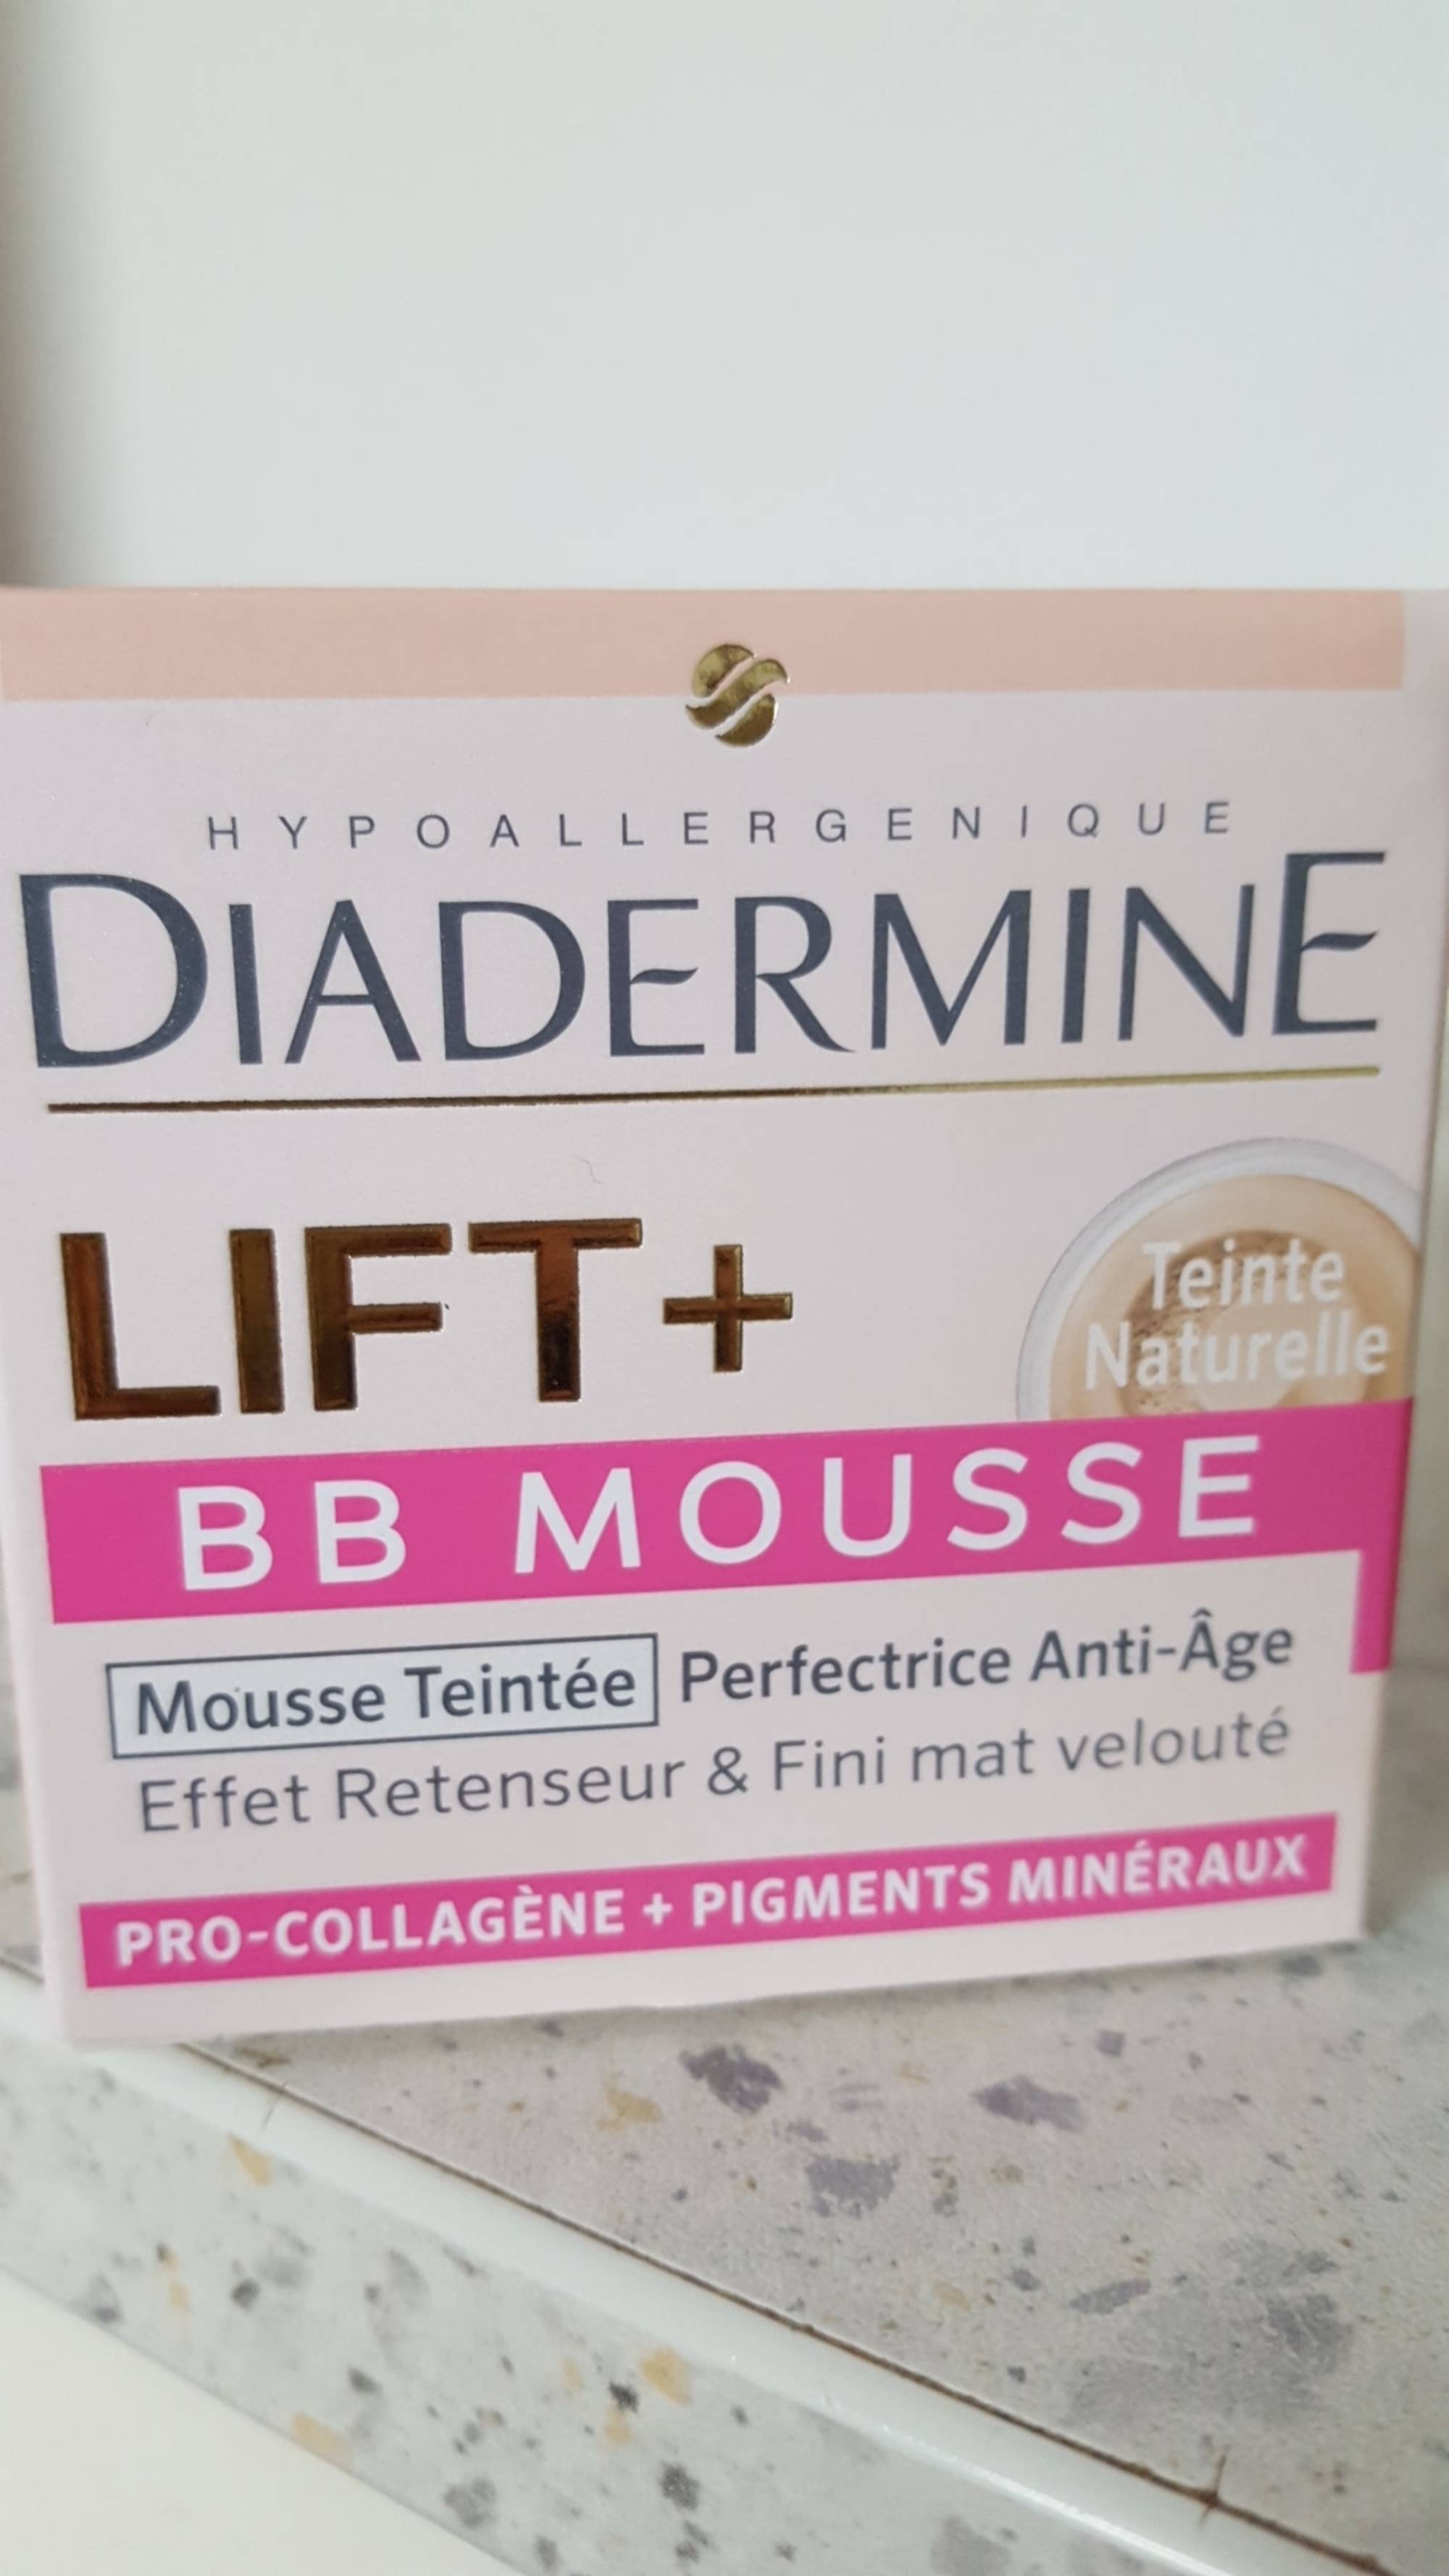 DIADERMINE - Lift+ - BB mousse anti-âge